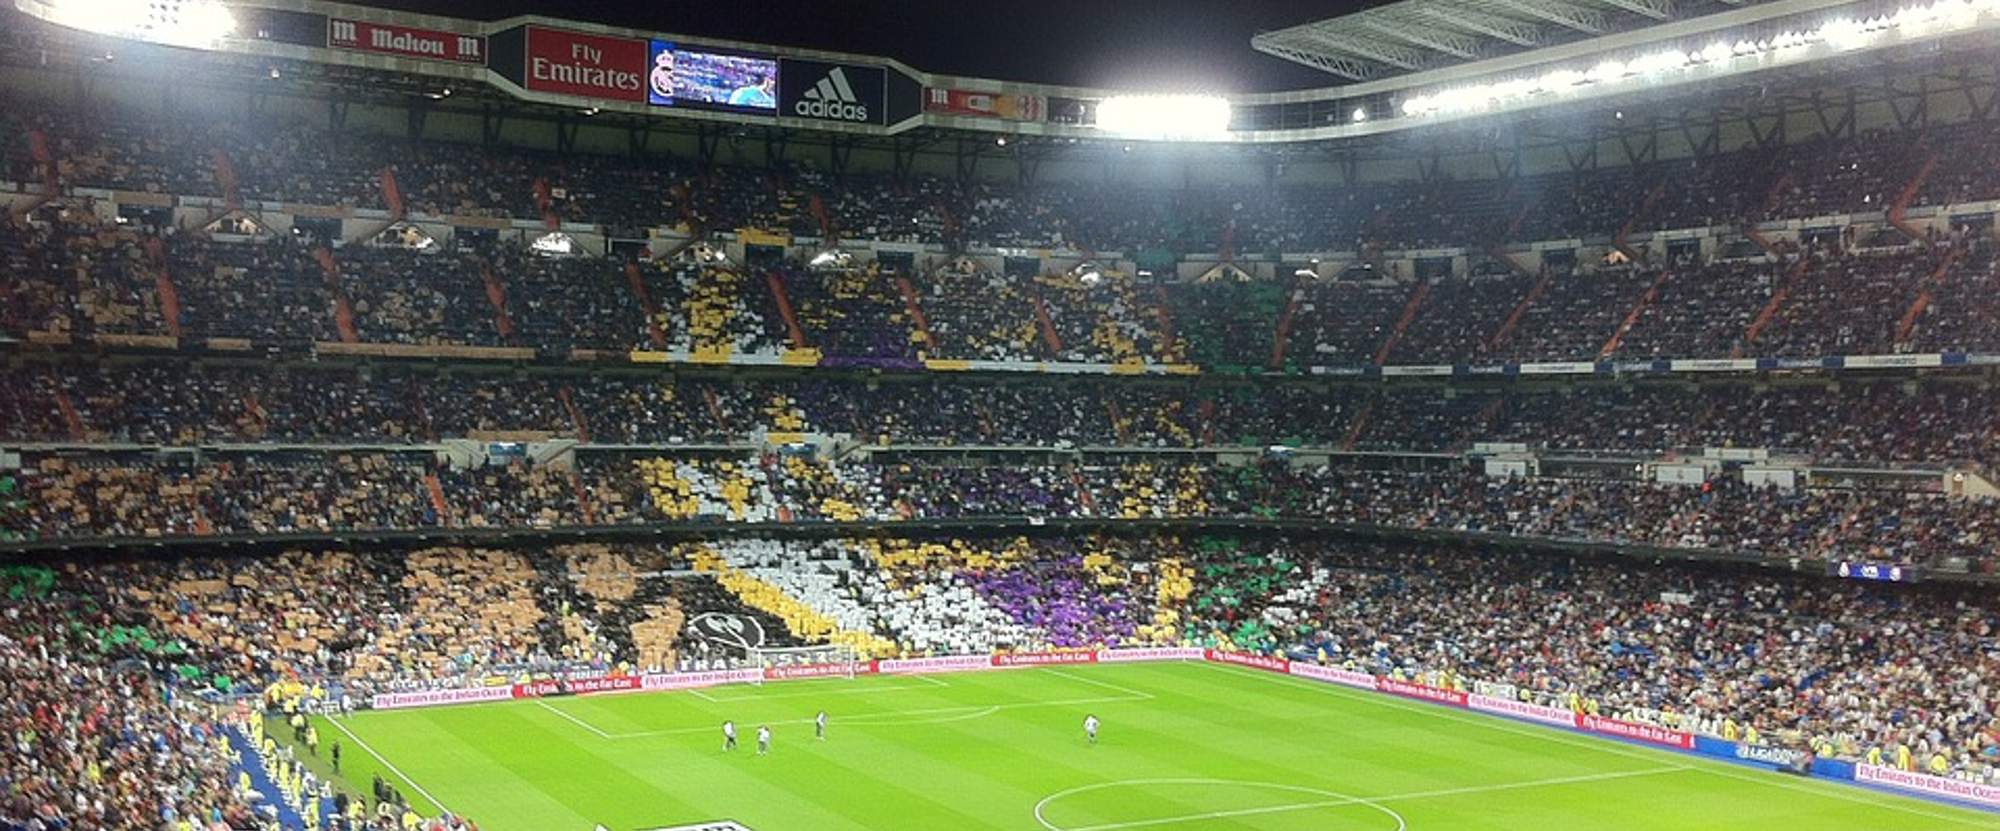 Real Madrid v Athletic Club de Bilbao